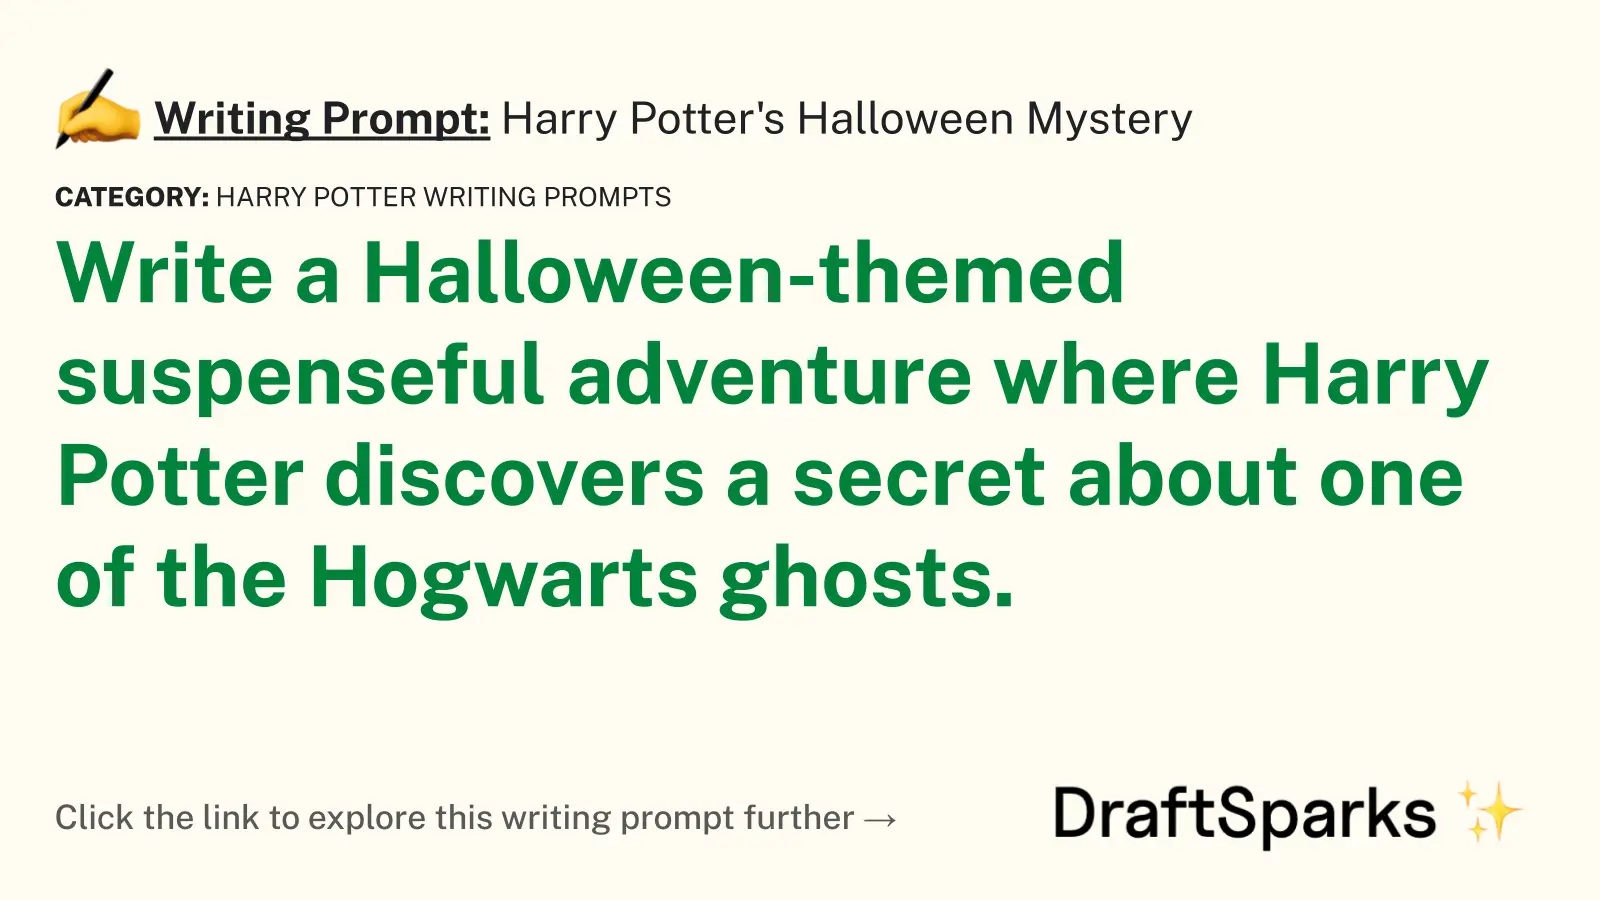 Harry Potter’s Halloween Mystery